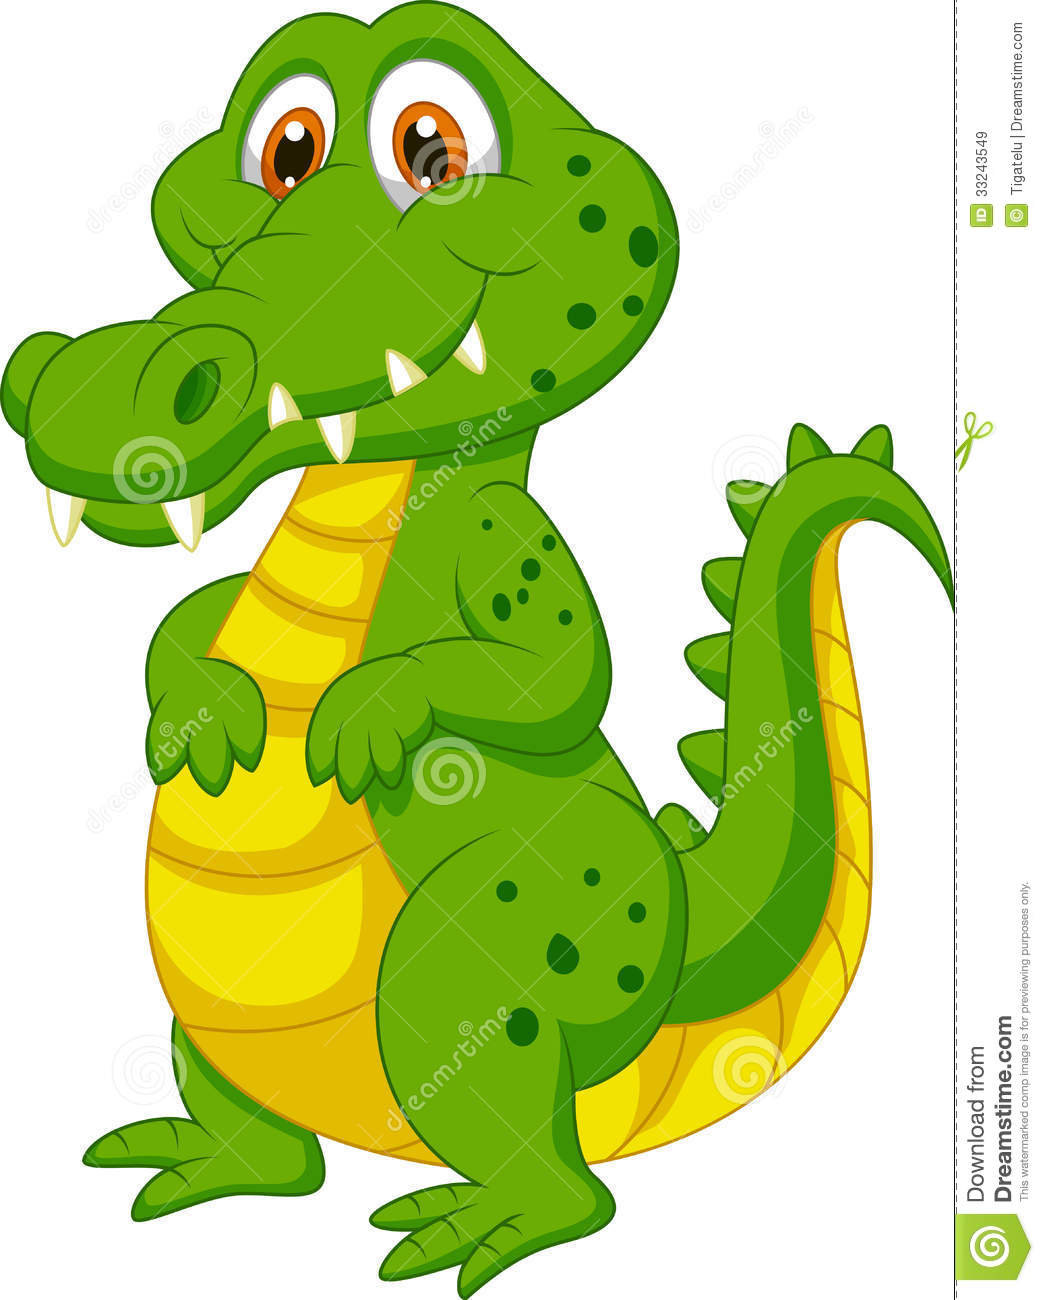 Cute Crocodile Cartoon Royalty Free Stock Images   Image  33243549